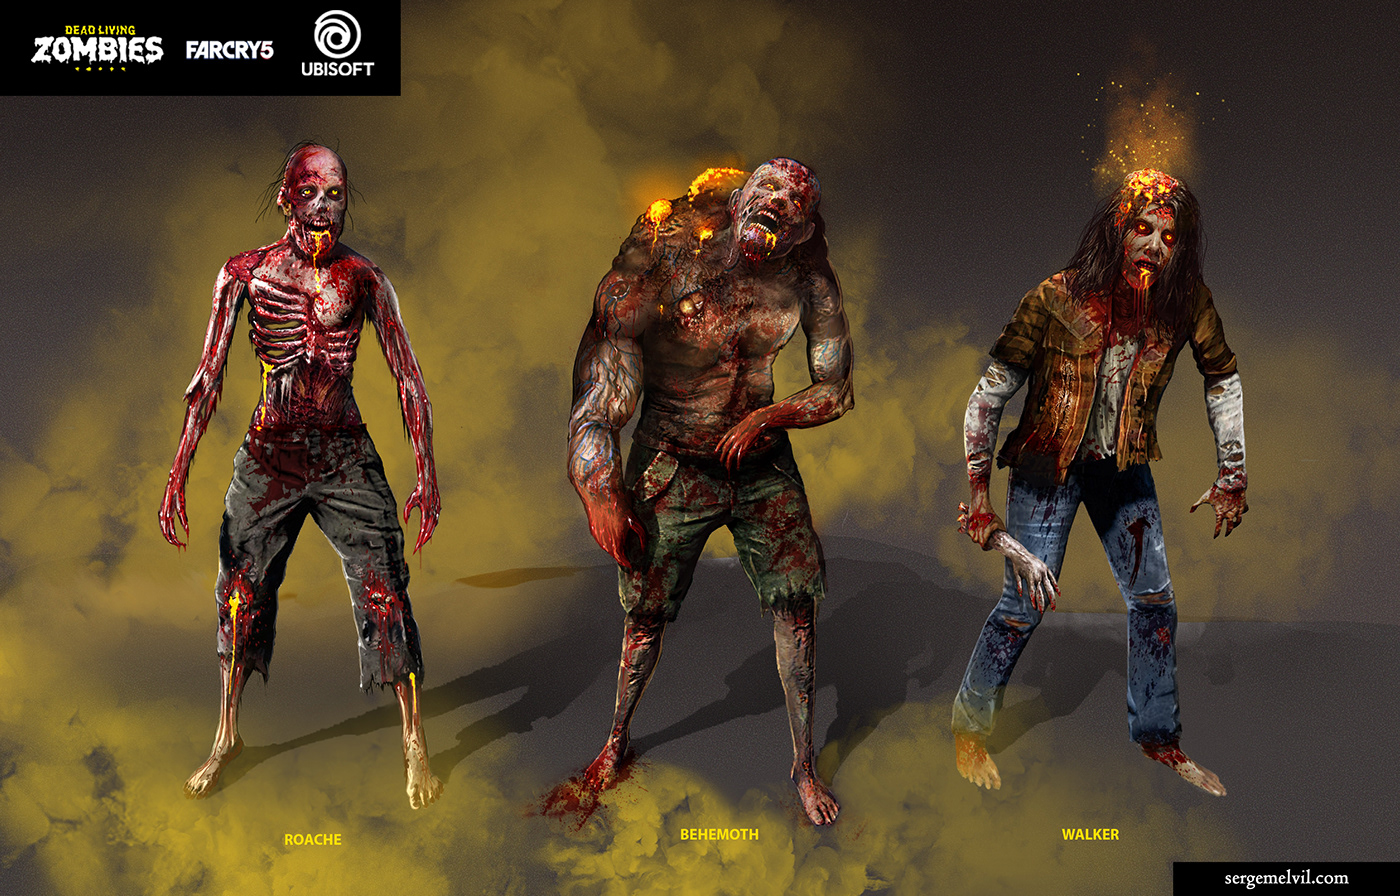 ubisoft zombies Farcry 5